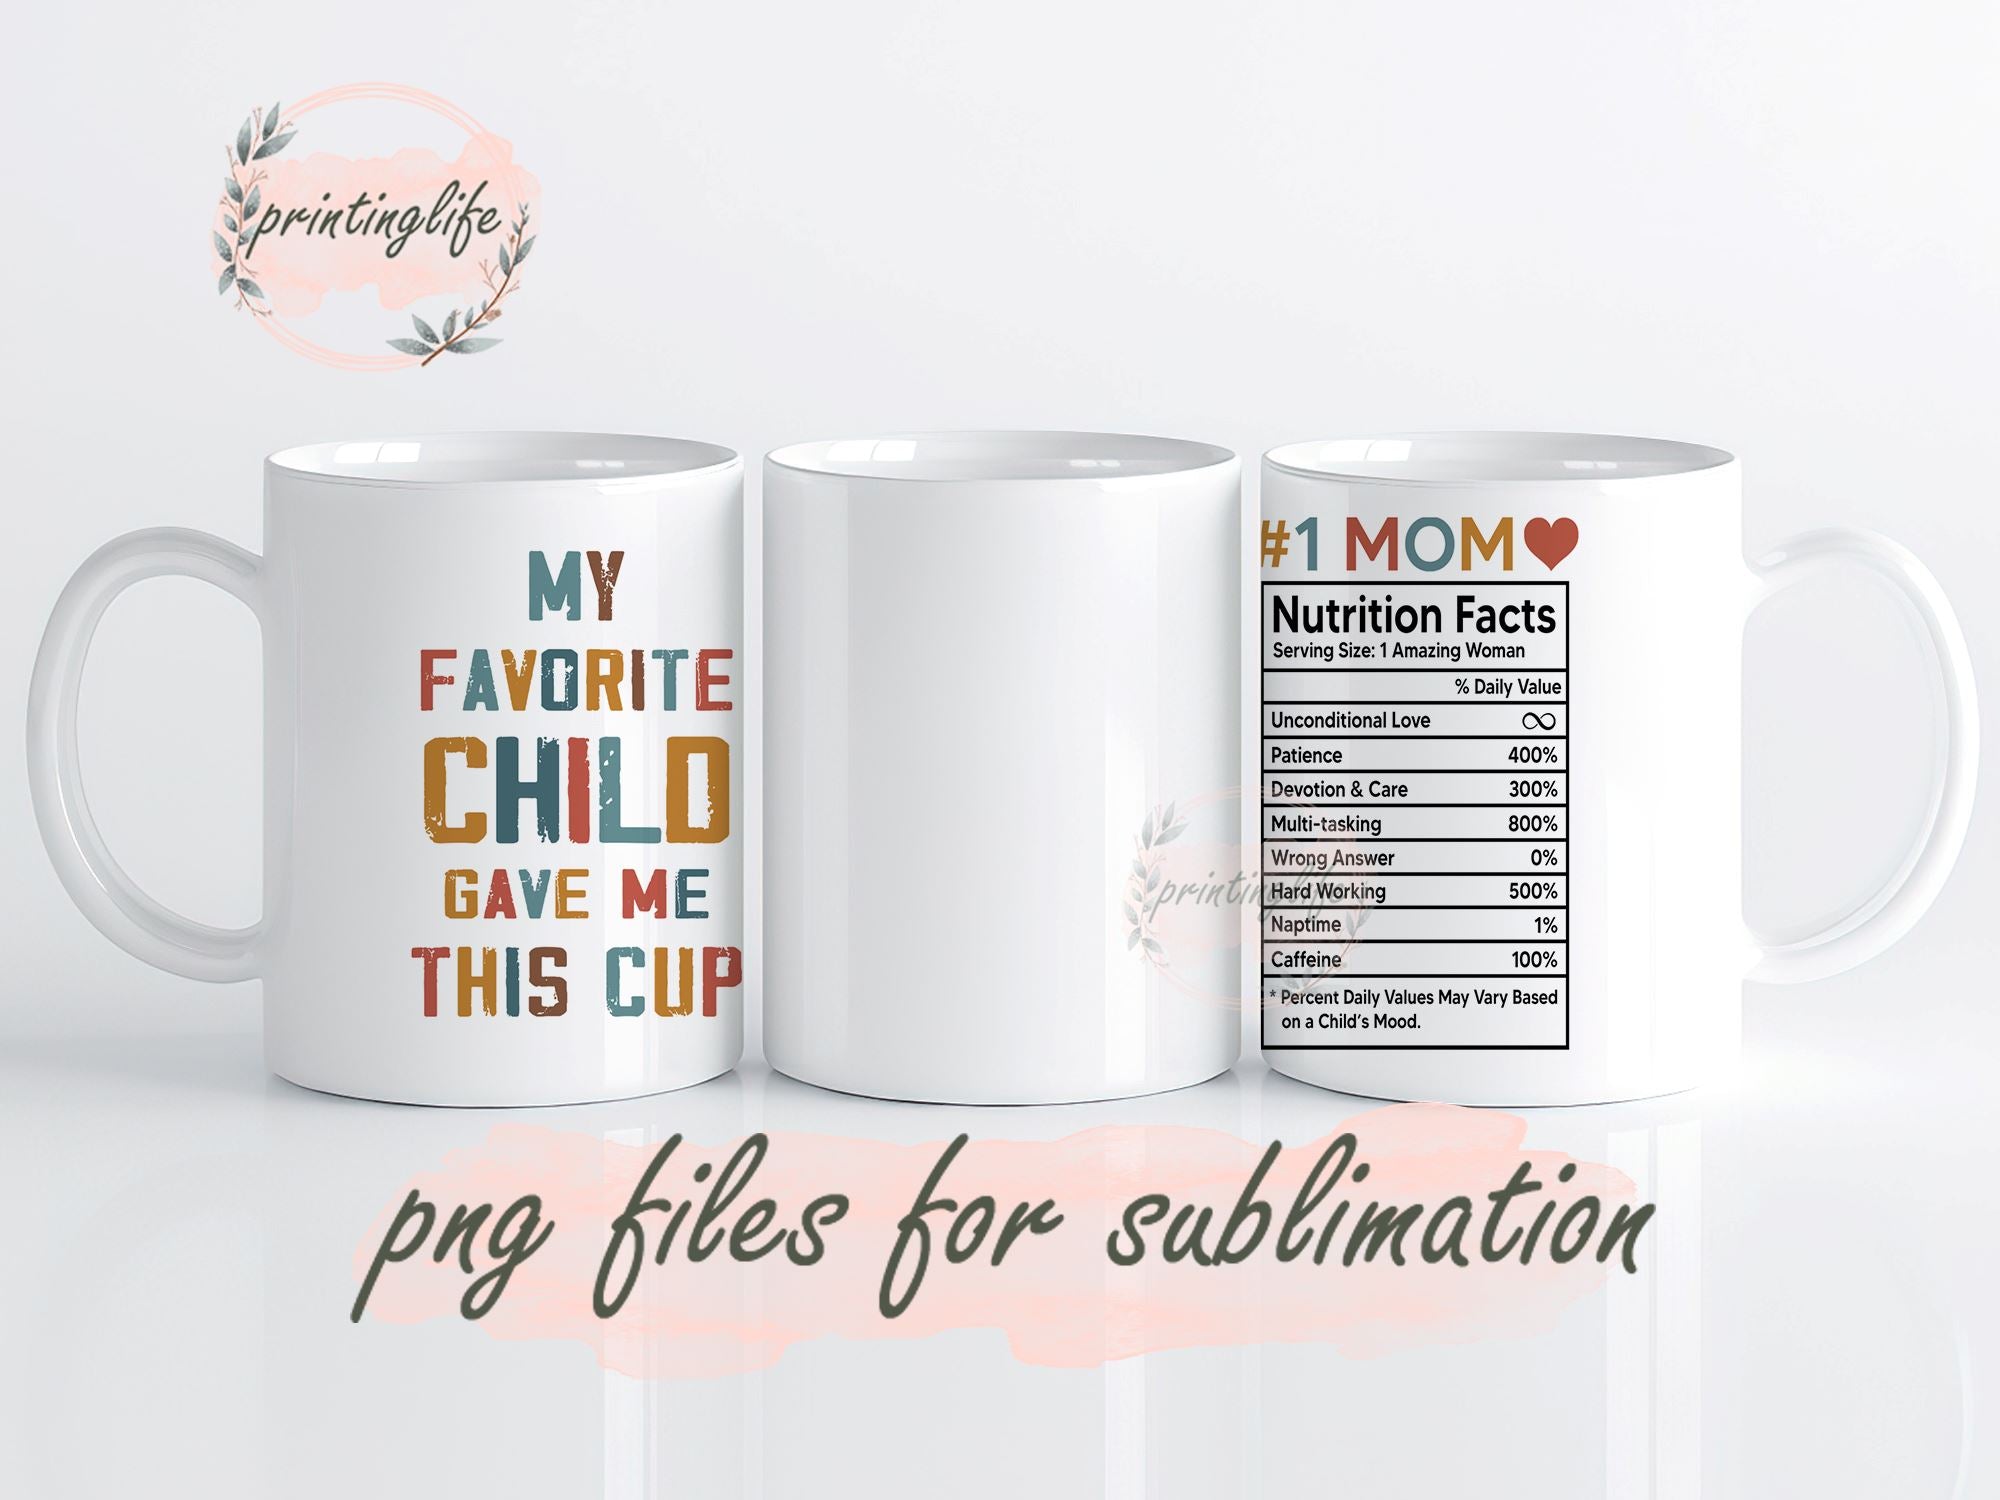 Funny Mom Birthday Gifts Mom Nutritional Facts Best Mom Gift Mug